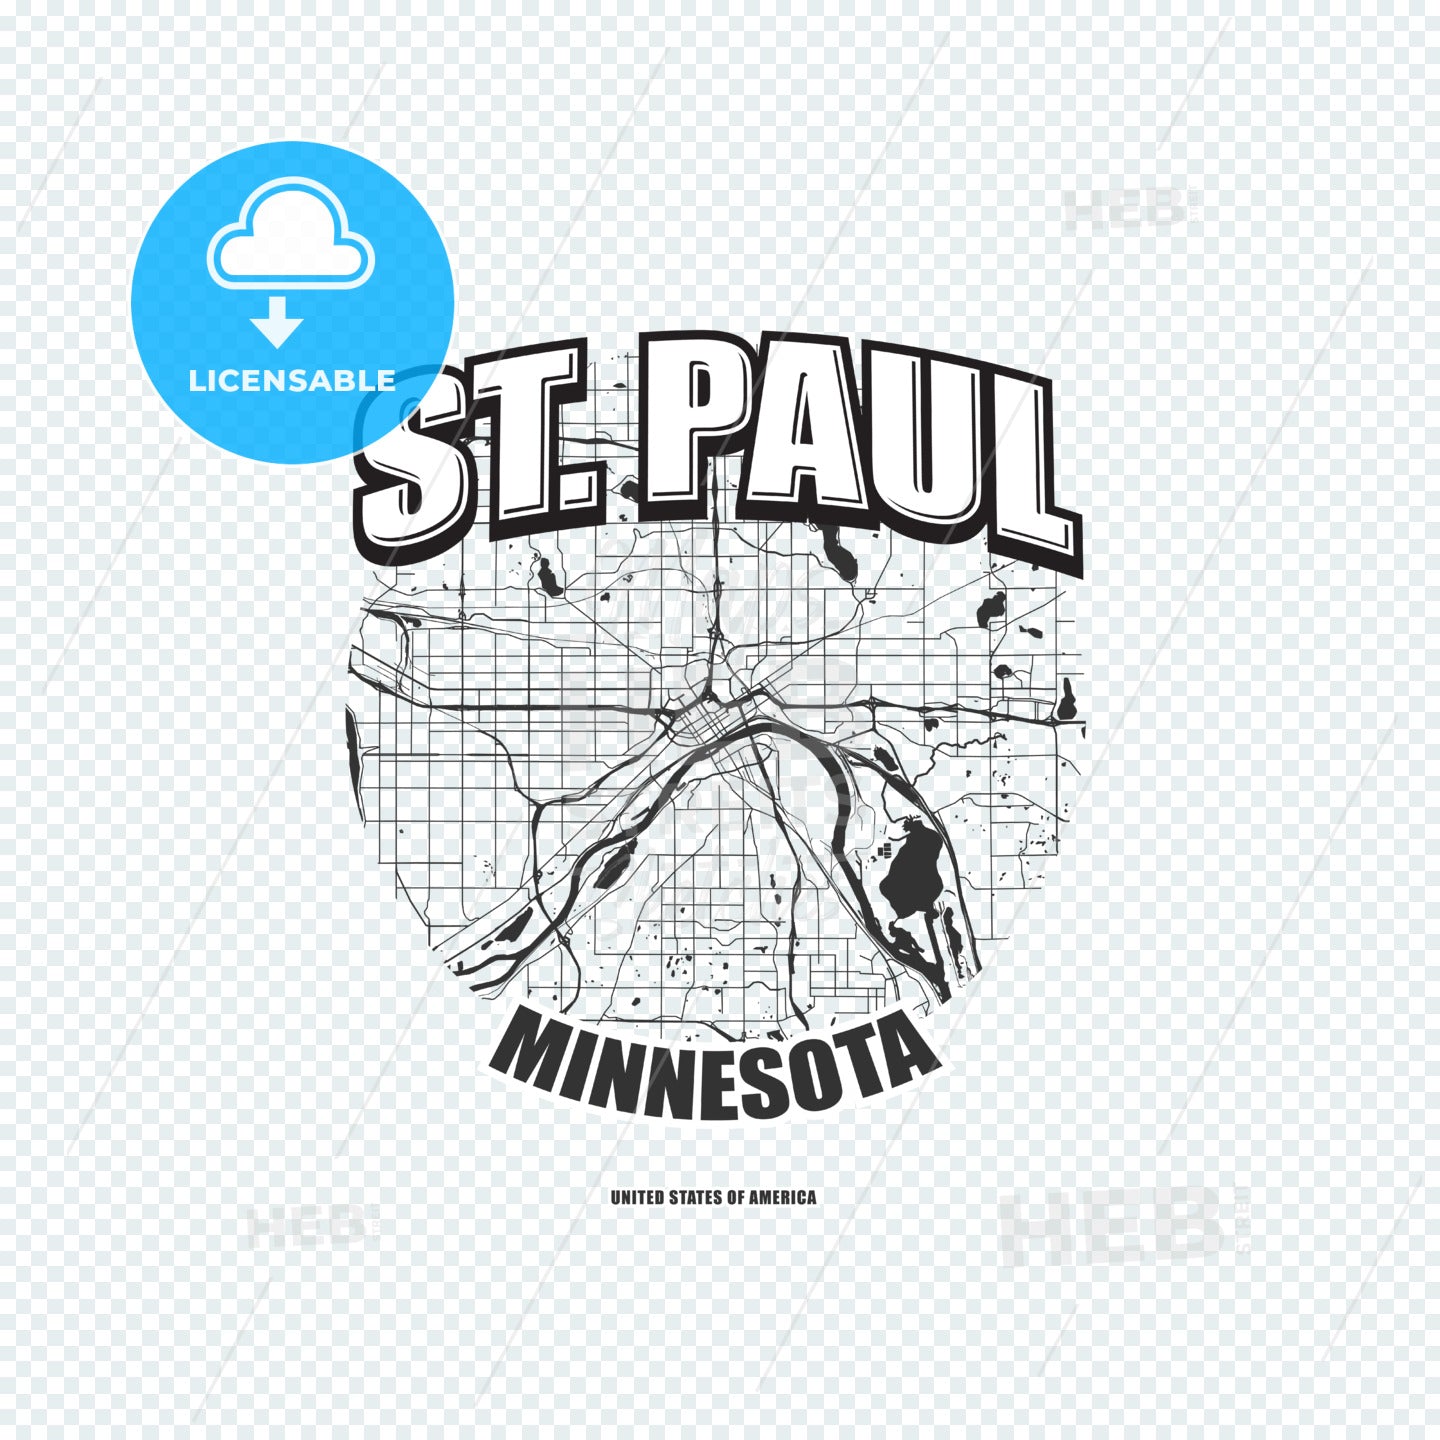 Saint Paul, Minnesota, logo artwork – instant download